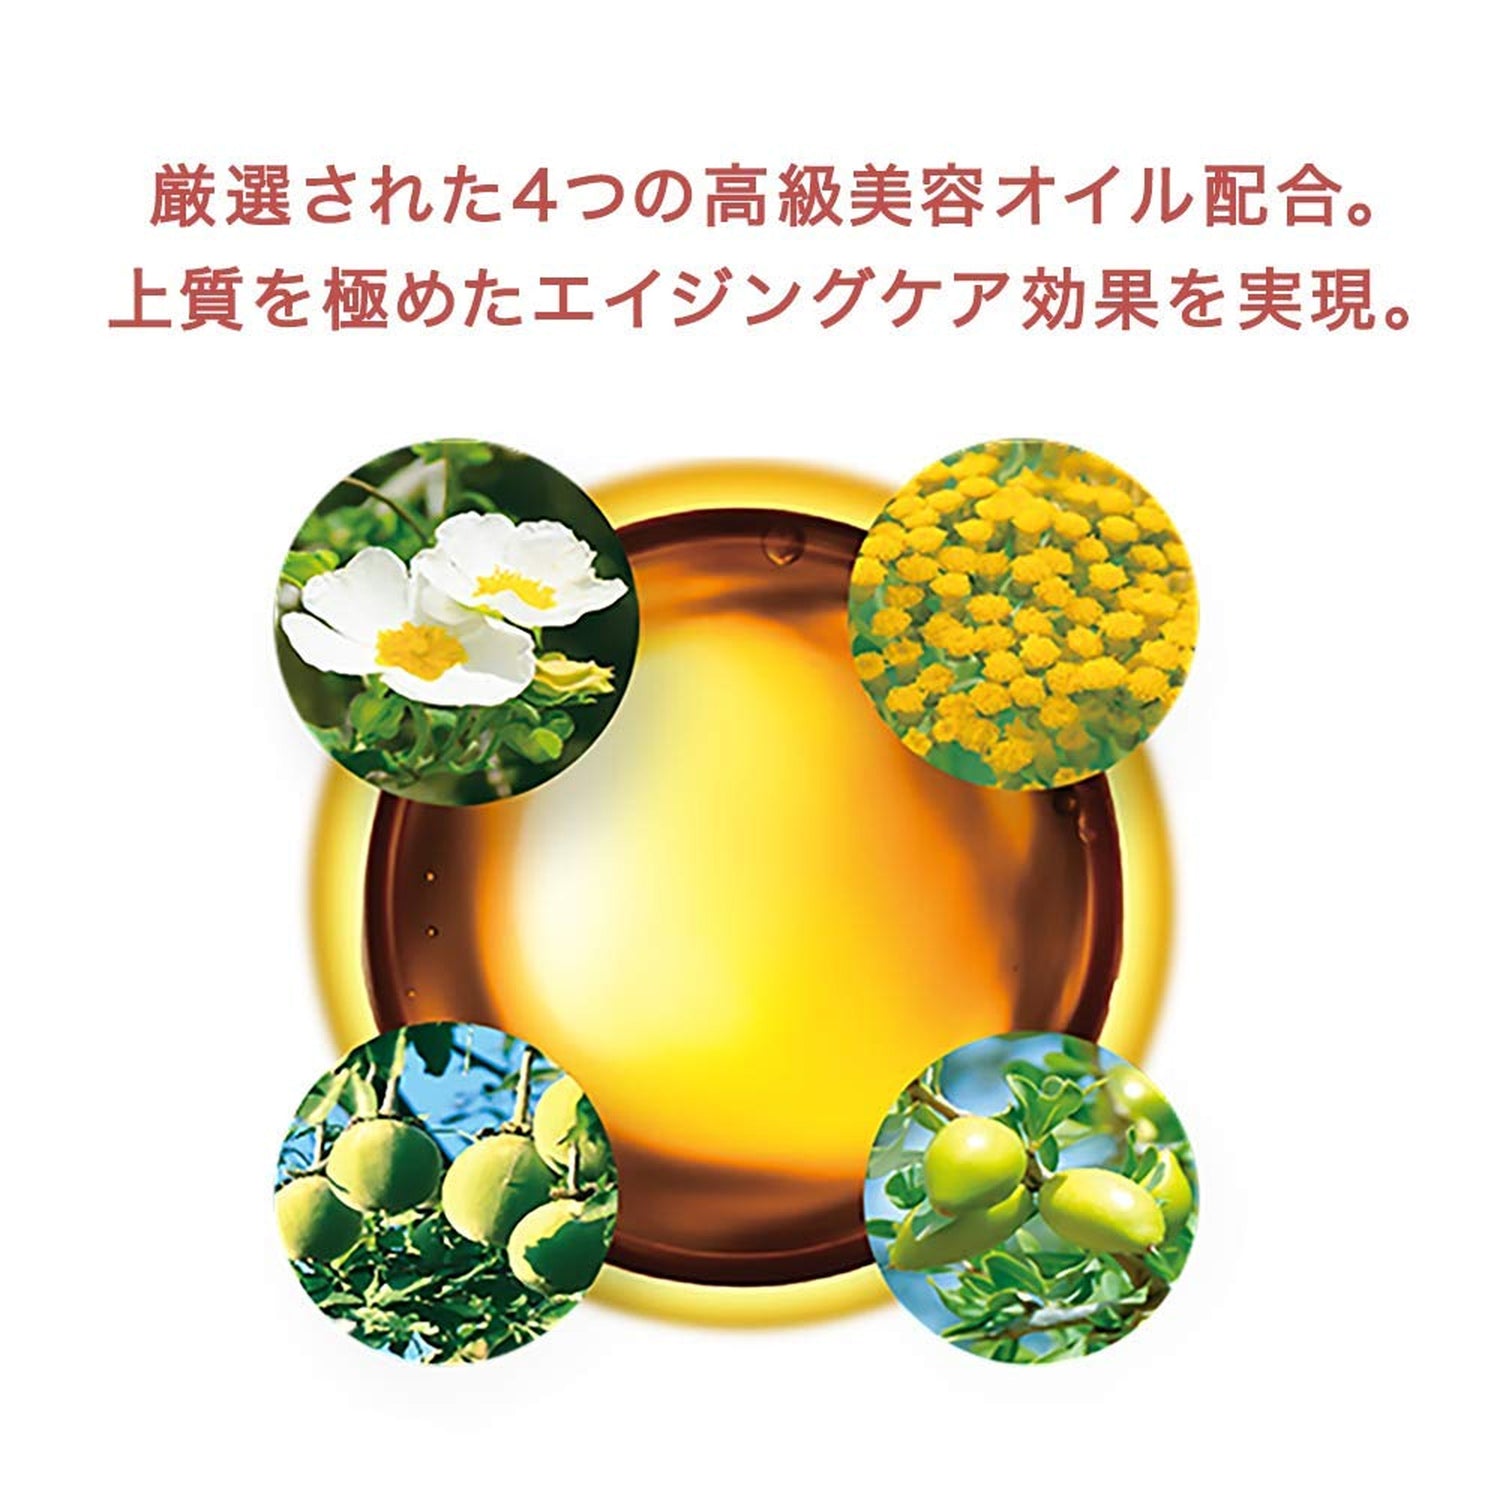 Attenir Skin Clear Cleanse Oil Fragrance-free 175ml